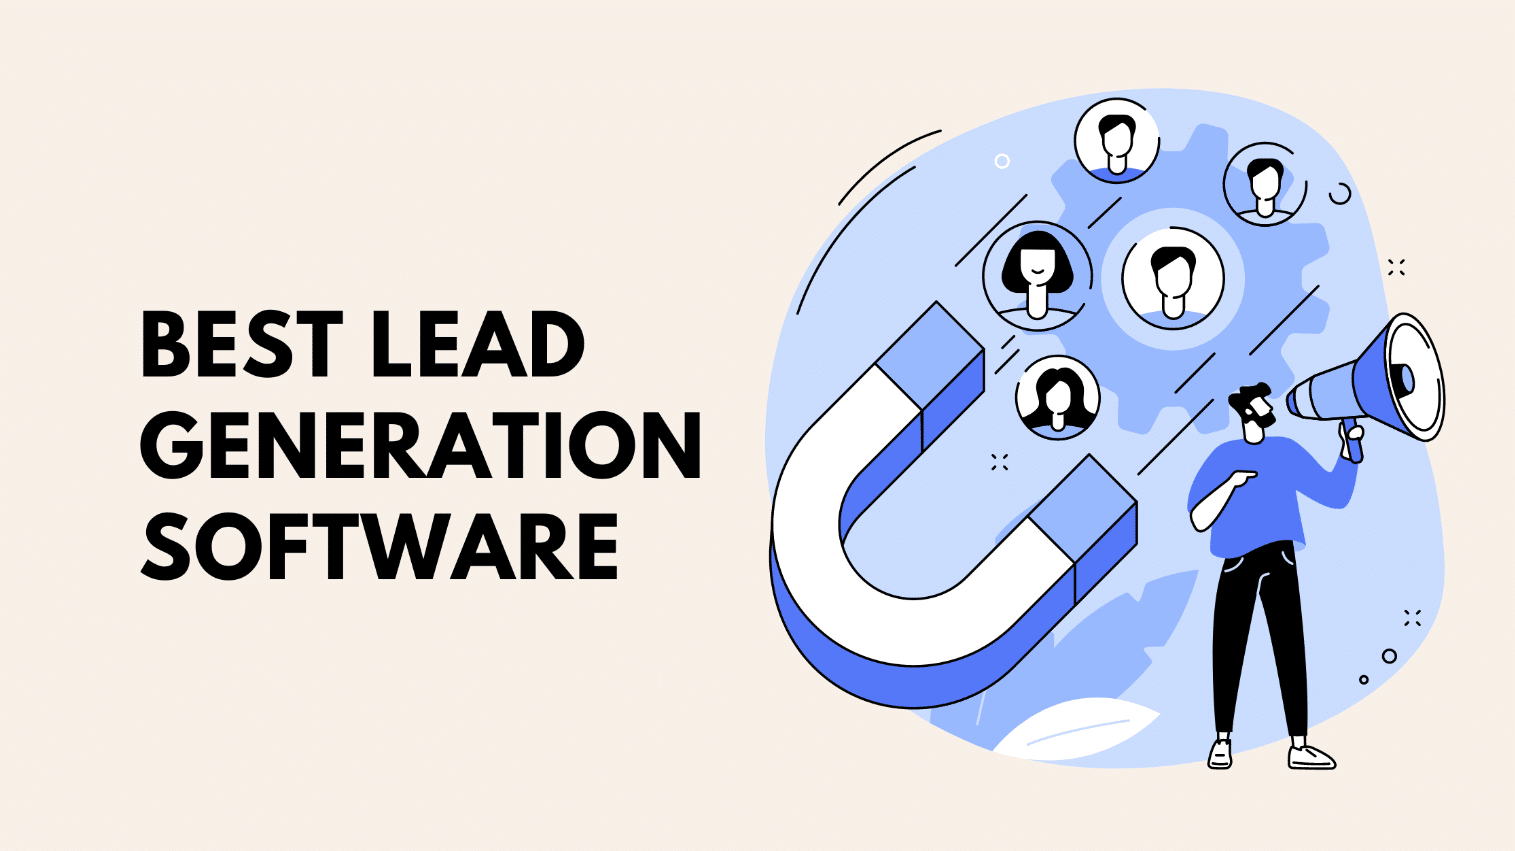 Best lead generation software